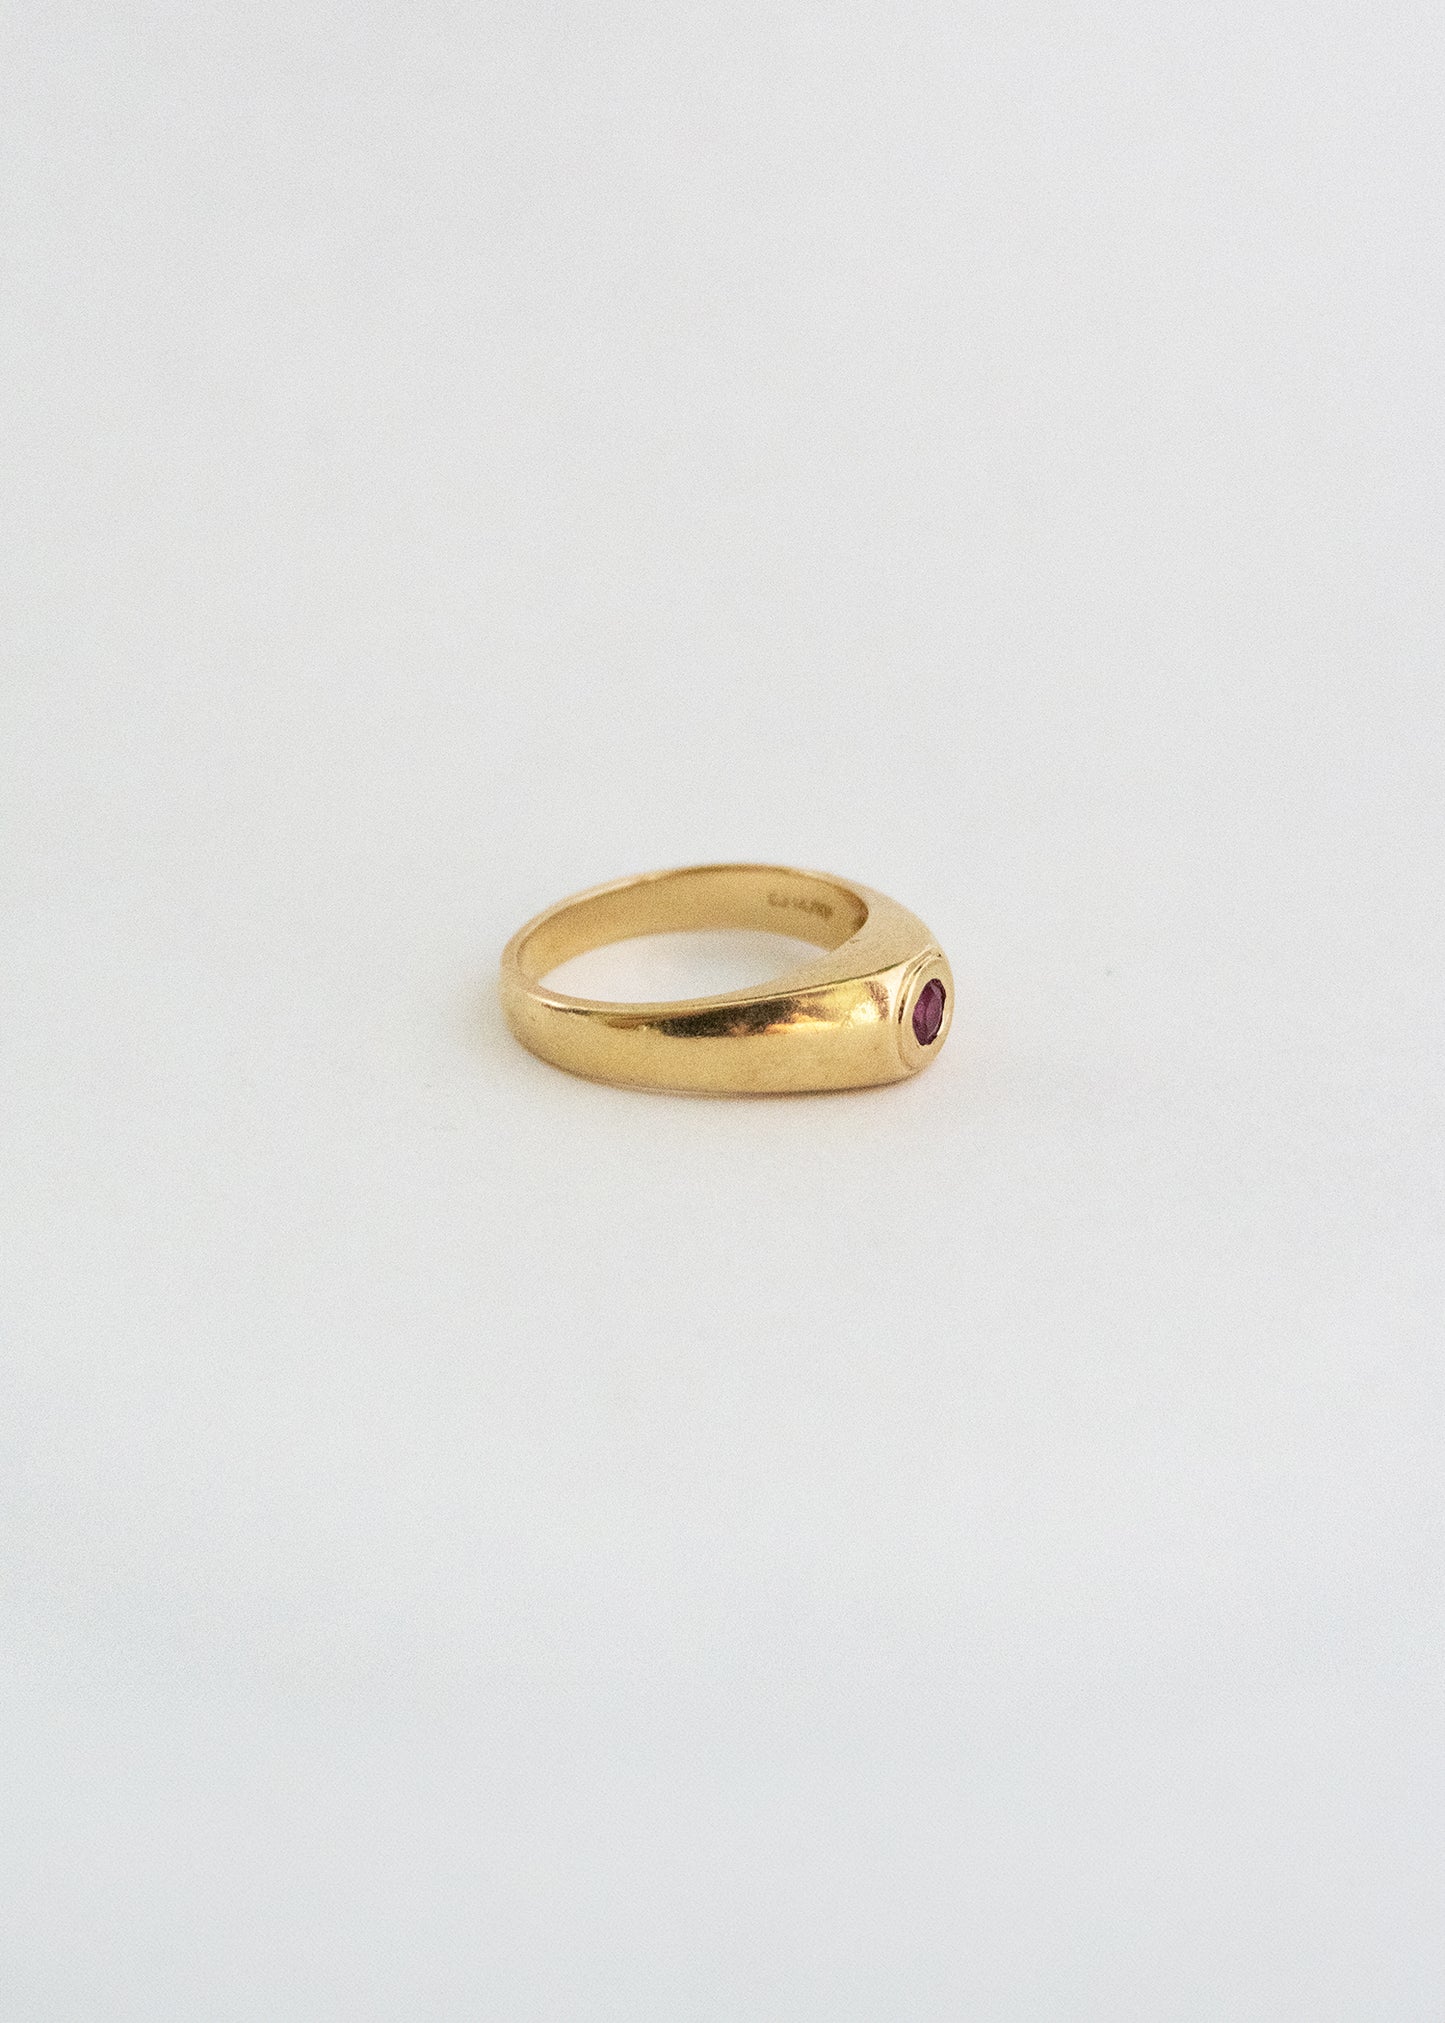 Vintage 14k Ruby Ring